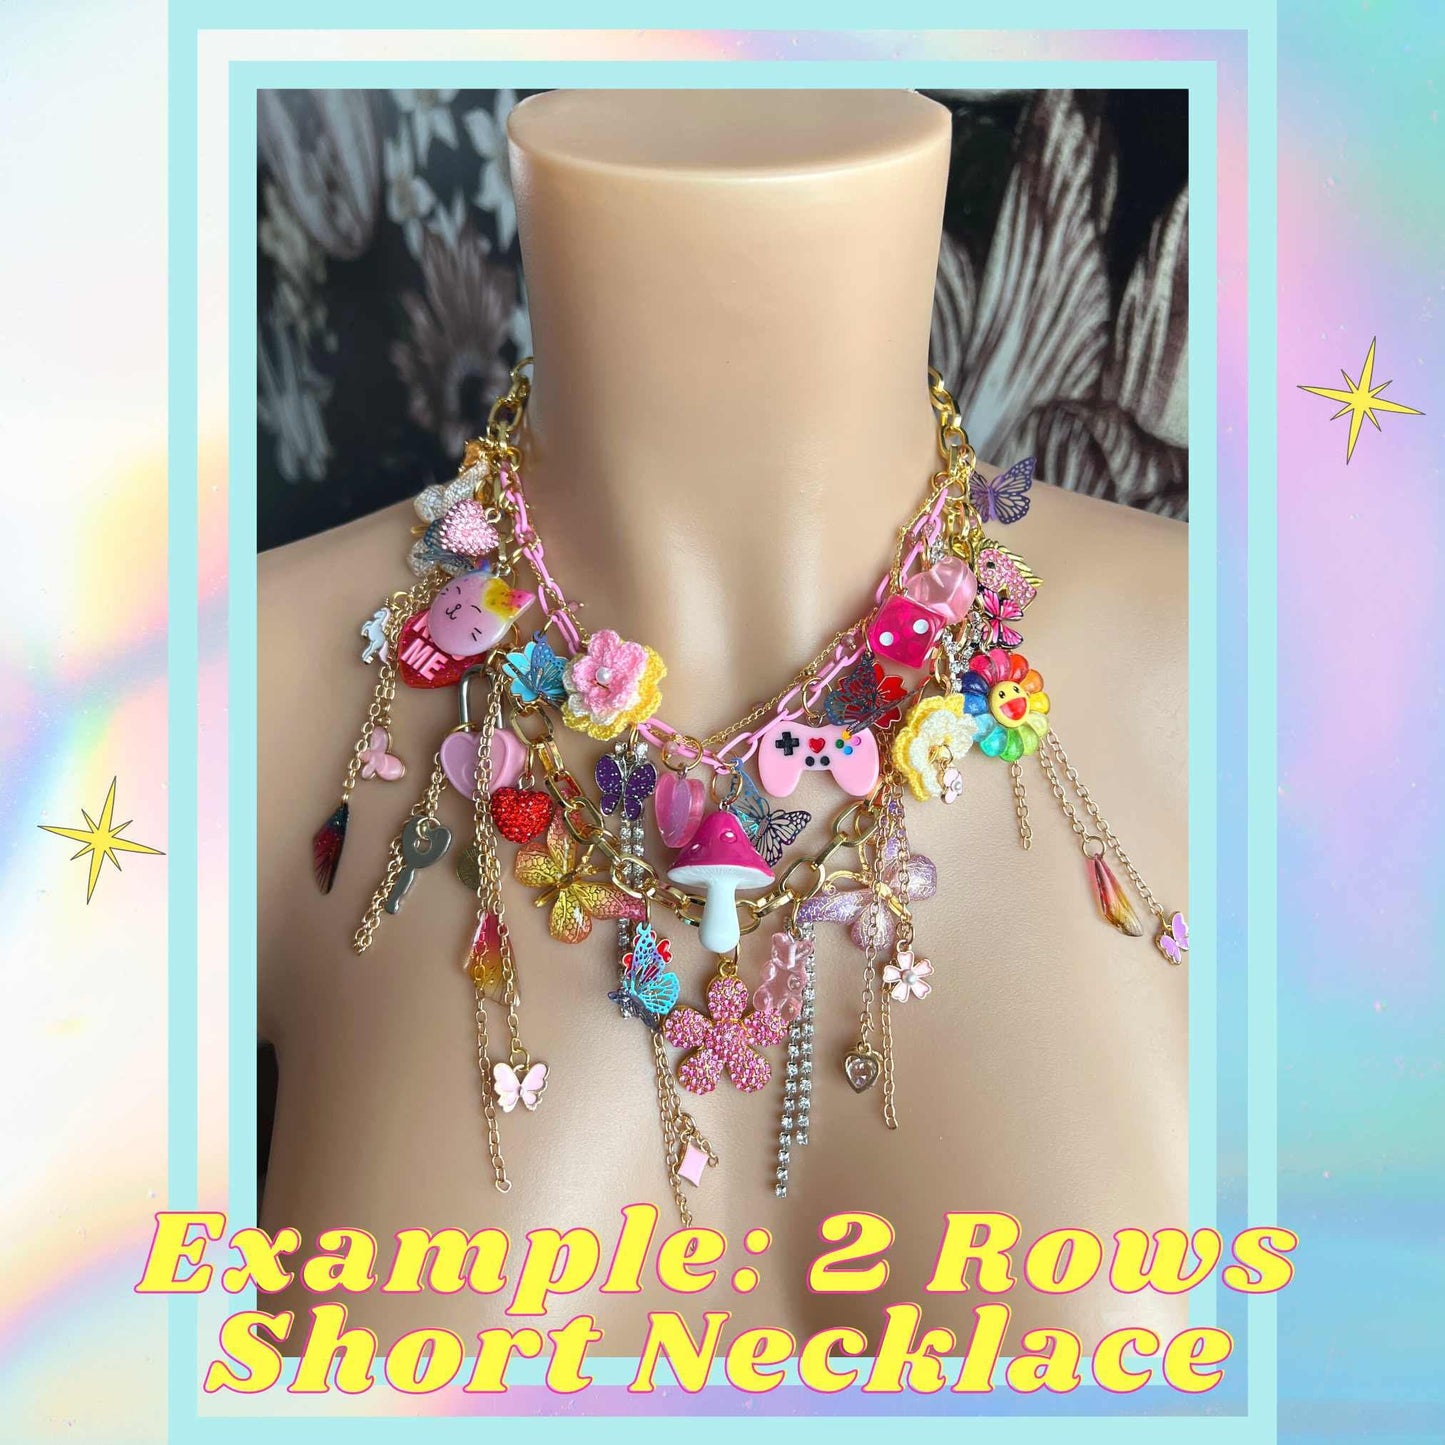 Ultra Club Charm Necklace Custom Order Request Personalized Jewelry Y2k Jewelry Rave 90s Nostalgia Club Necklace Rainbow Necklace